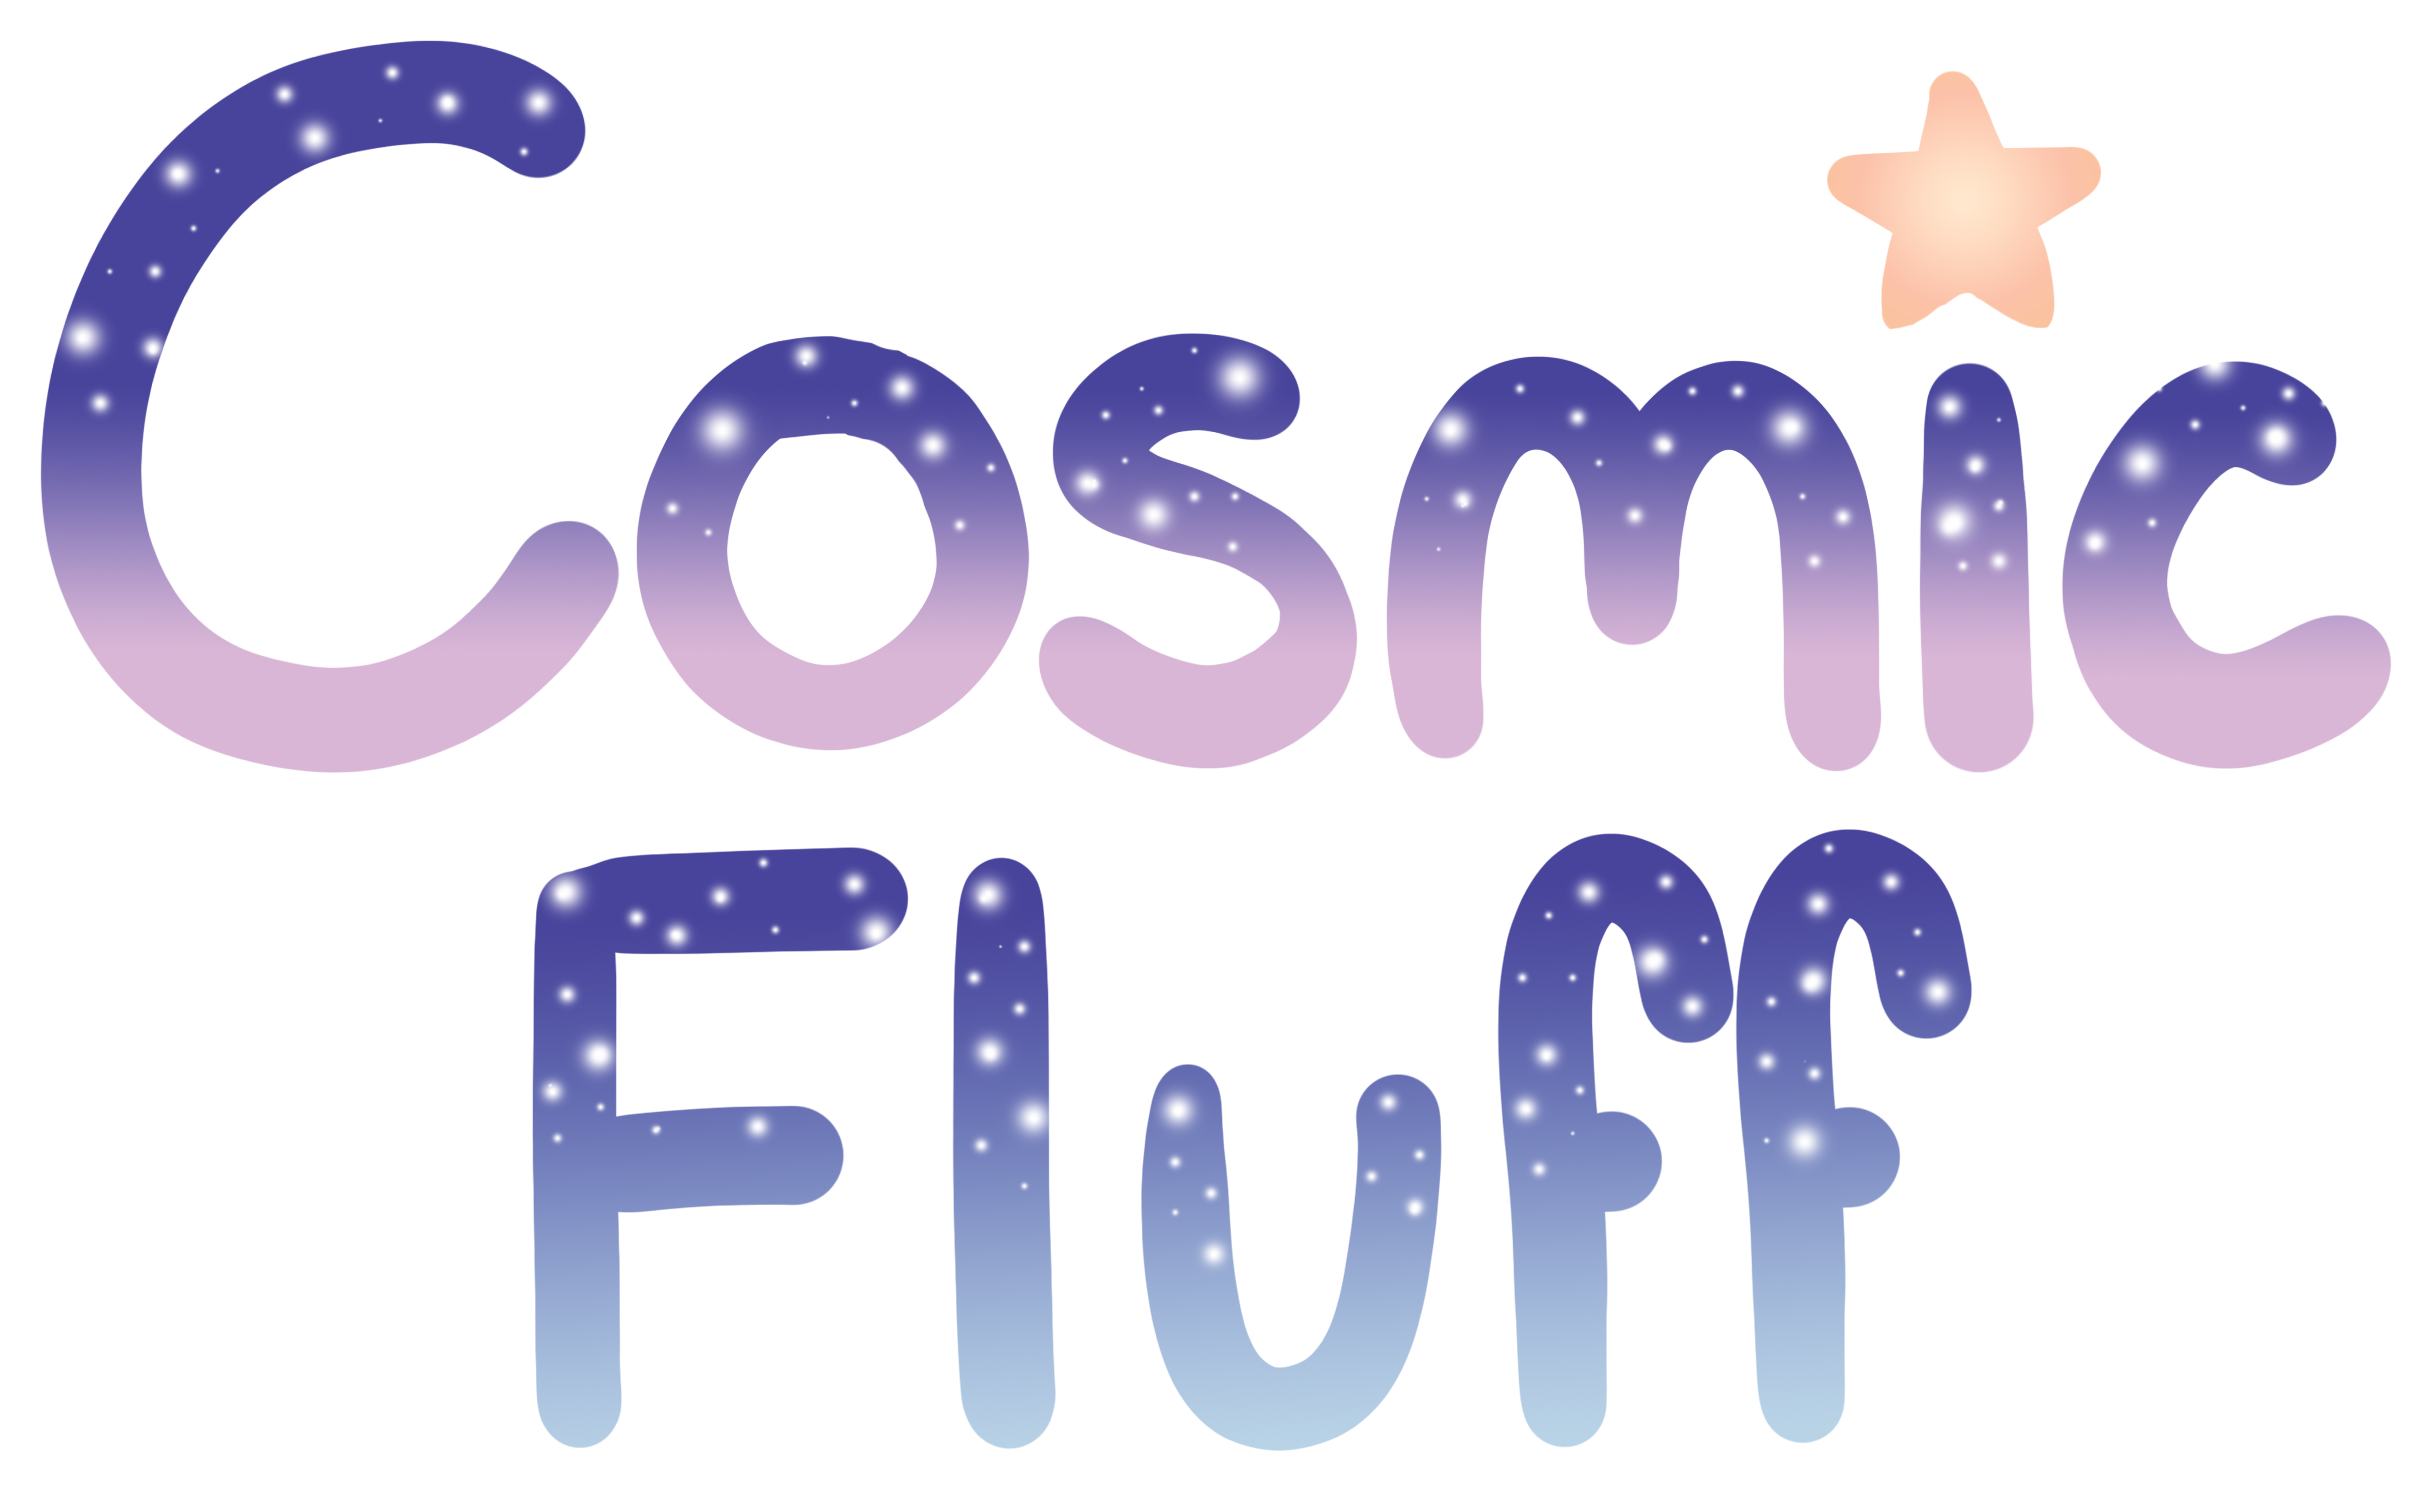 Cosmic Fluff